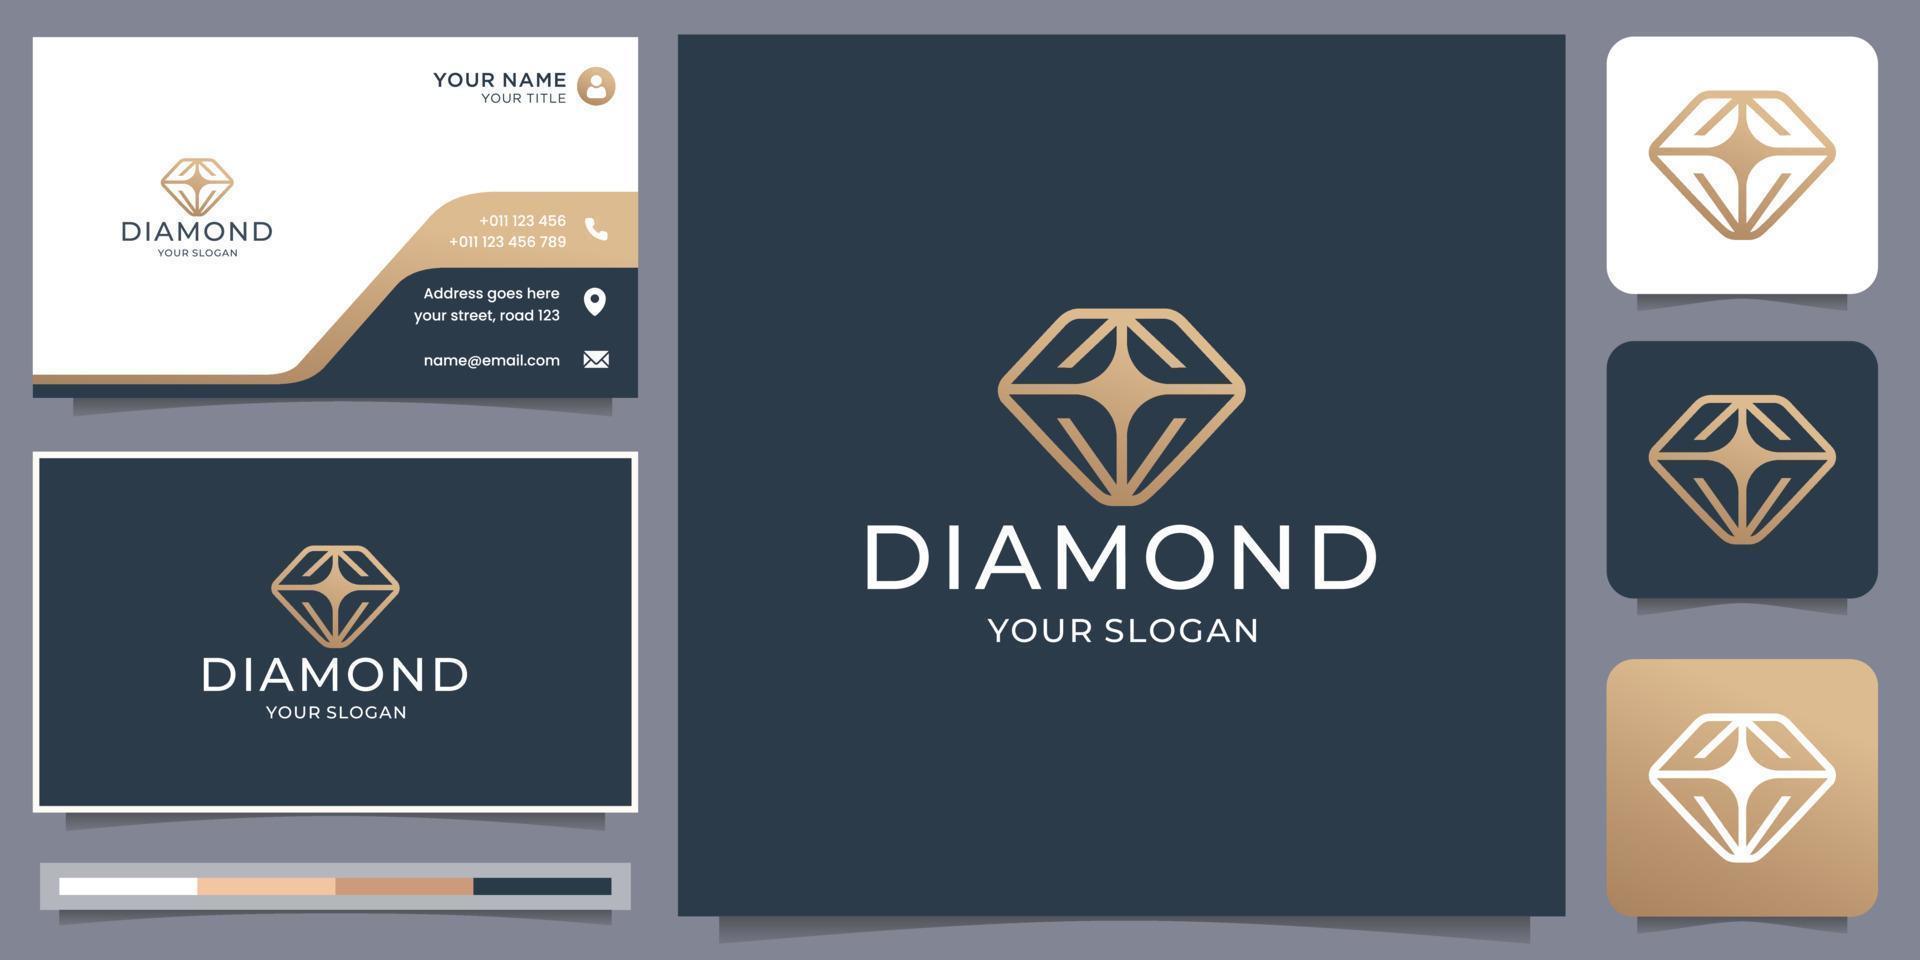 creative diamond logo with line art shape design template and business card illustration vector